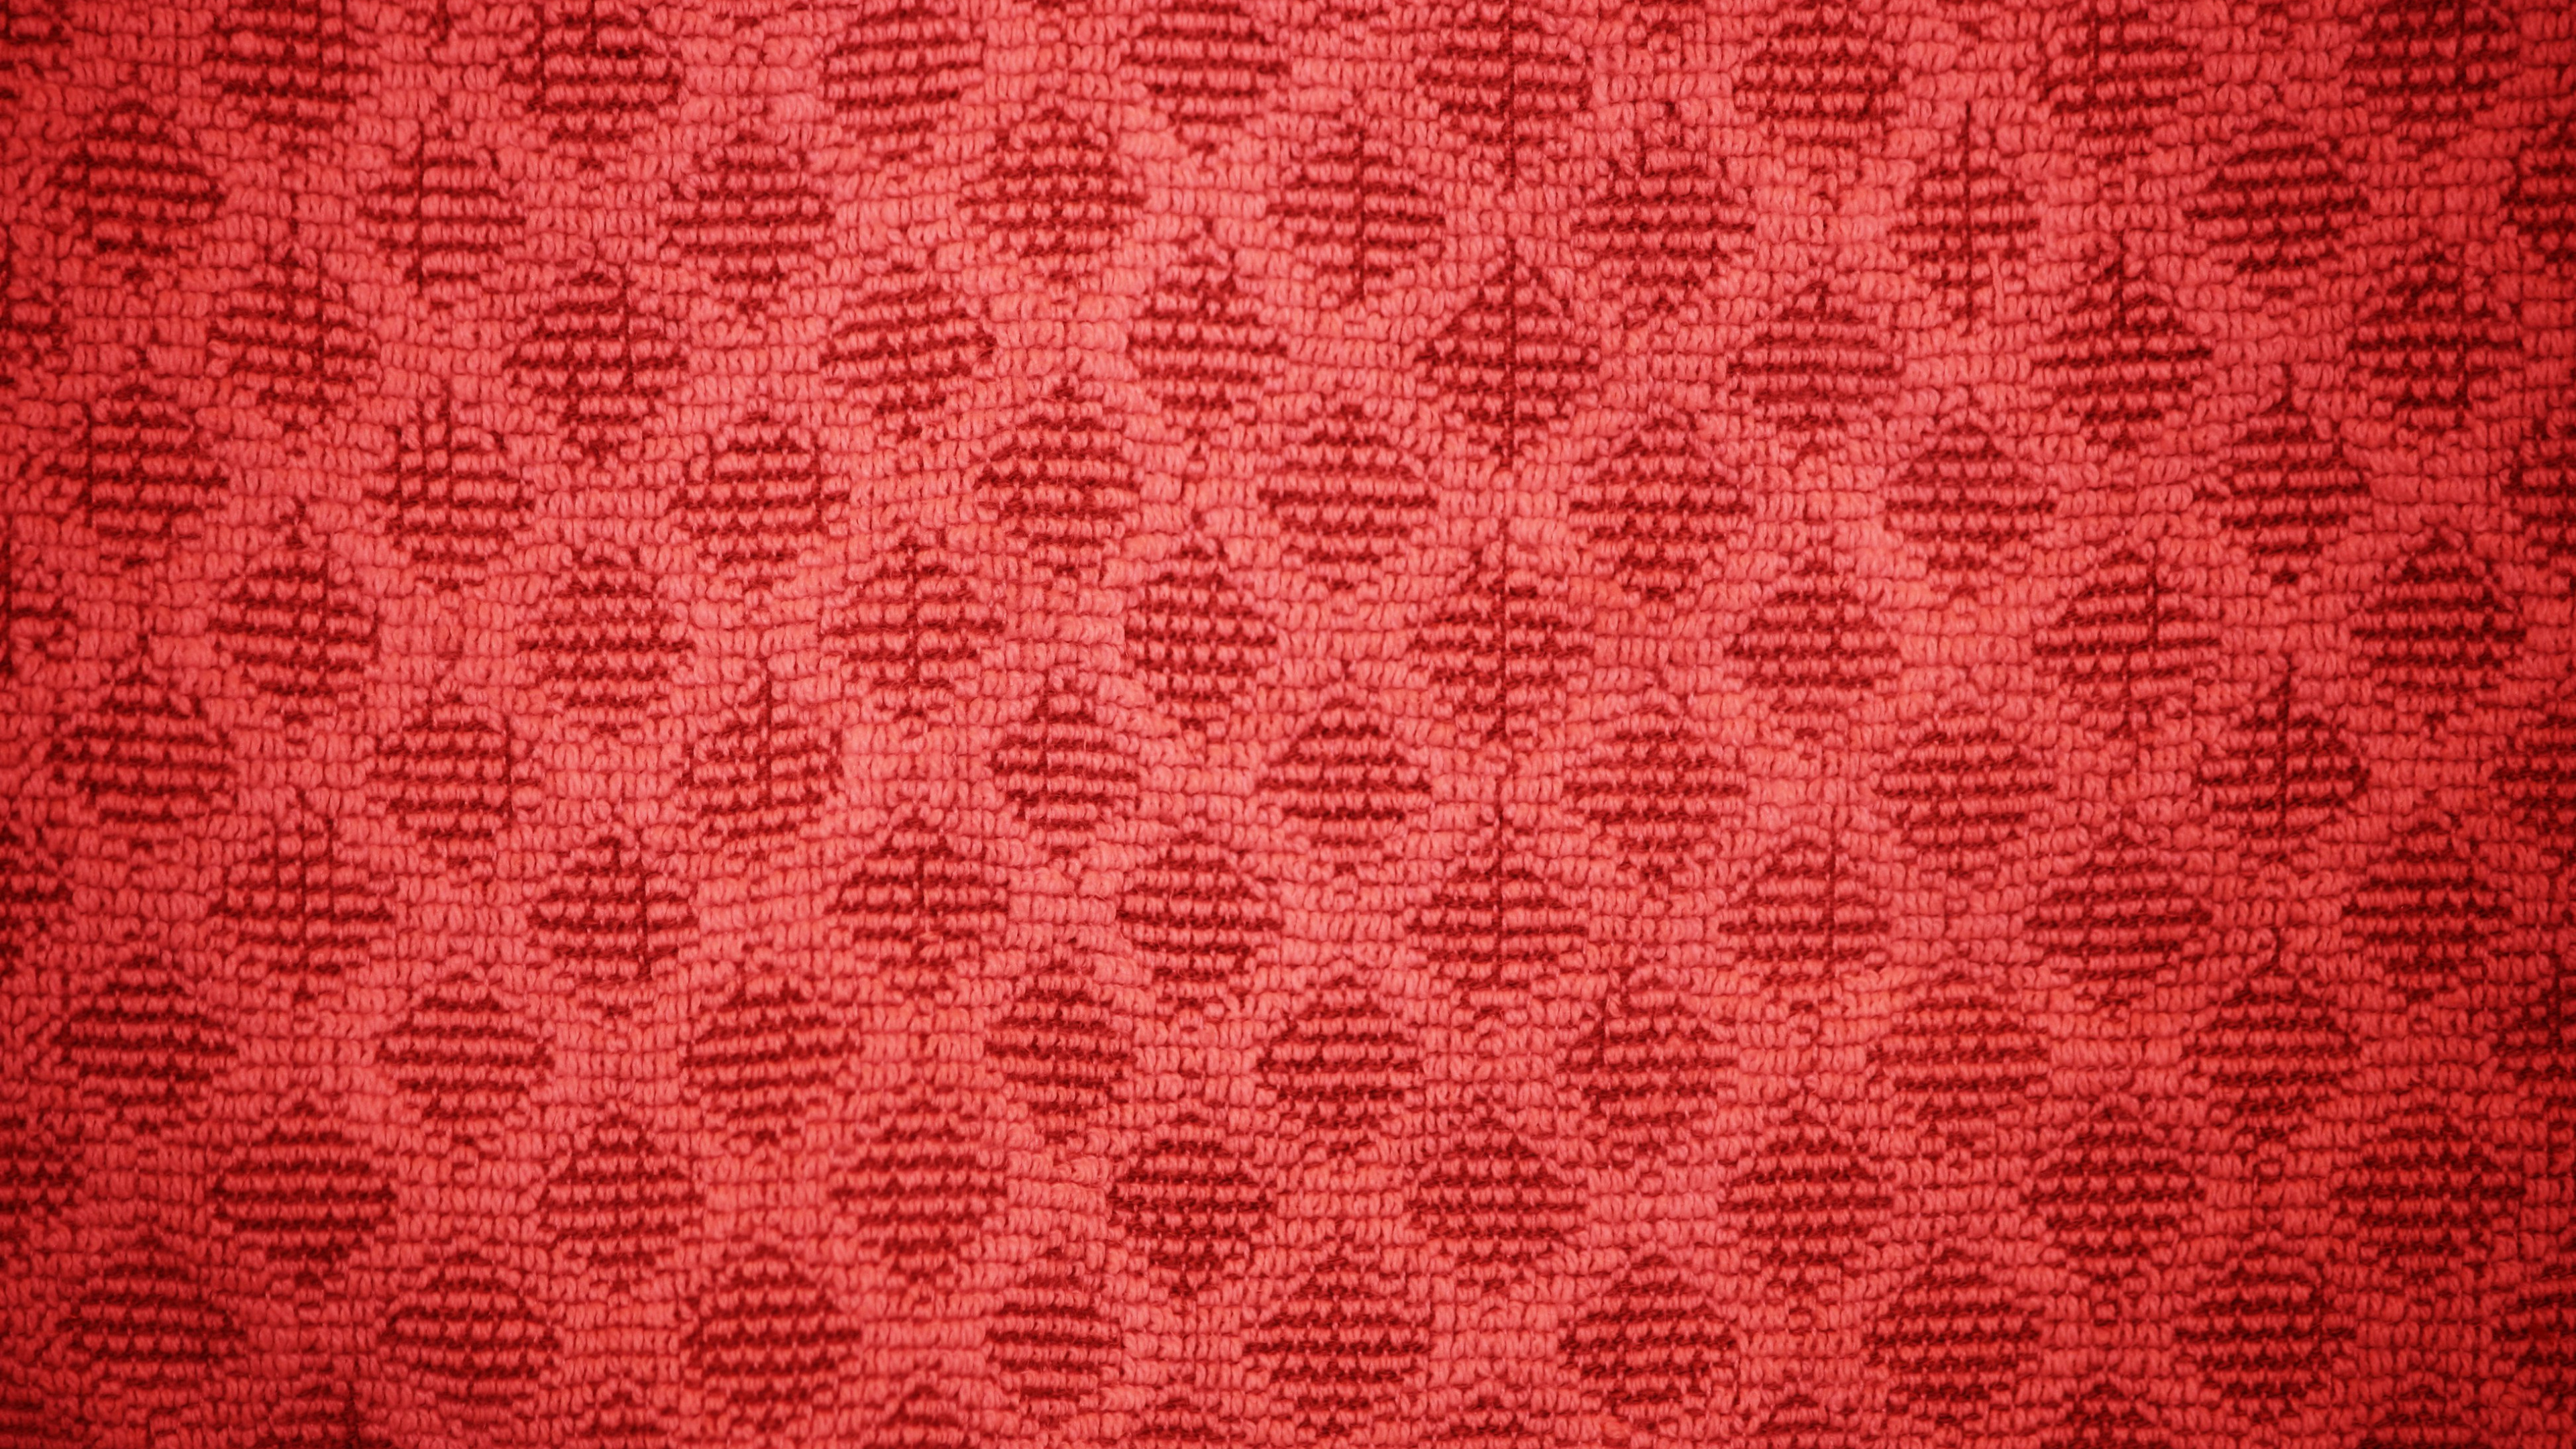 Textil Floral Rojo y Blanco. Wallpaper in 3840x2160 Resolution